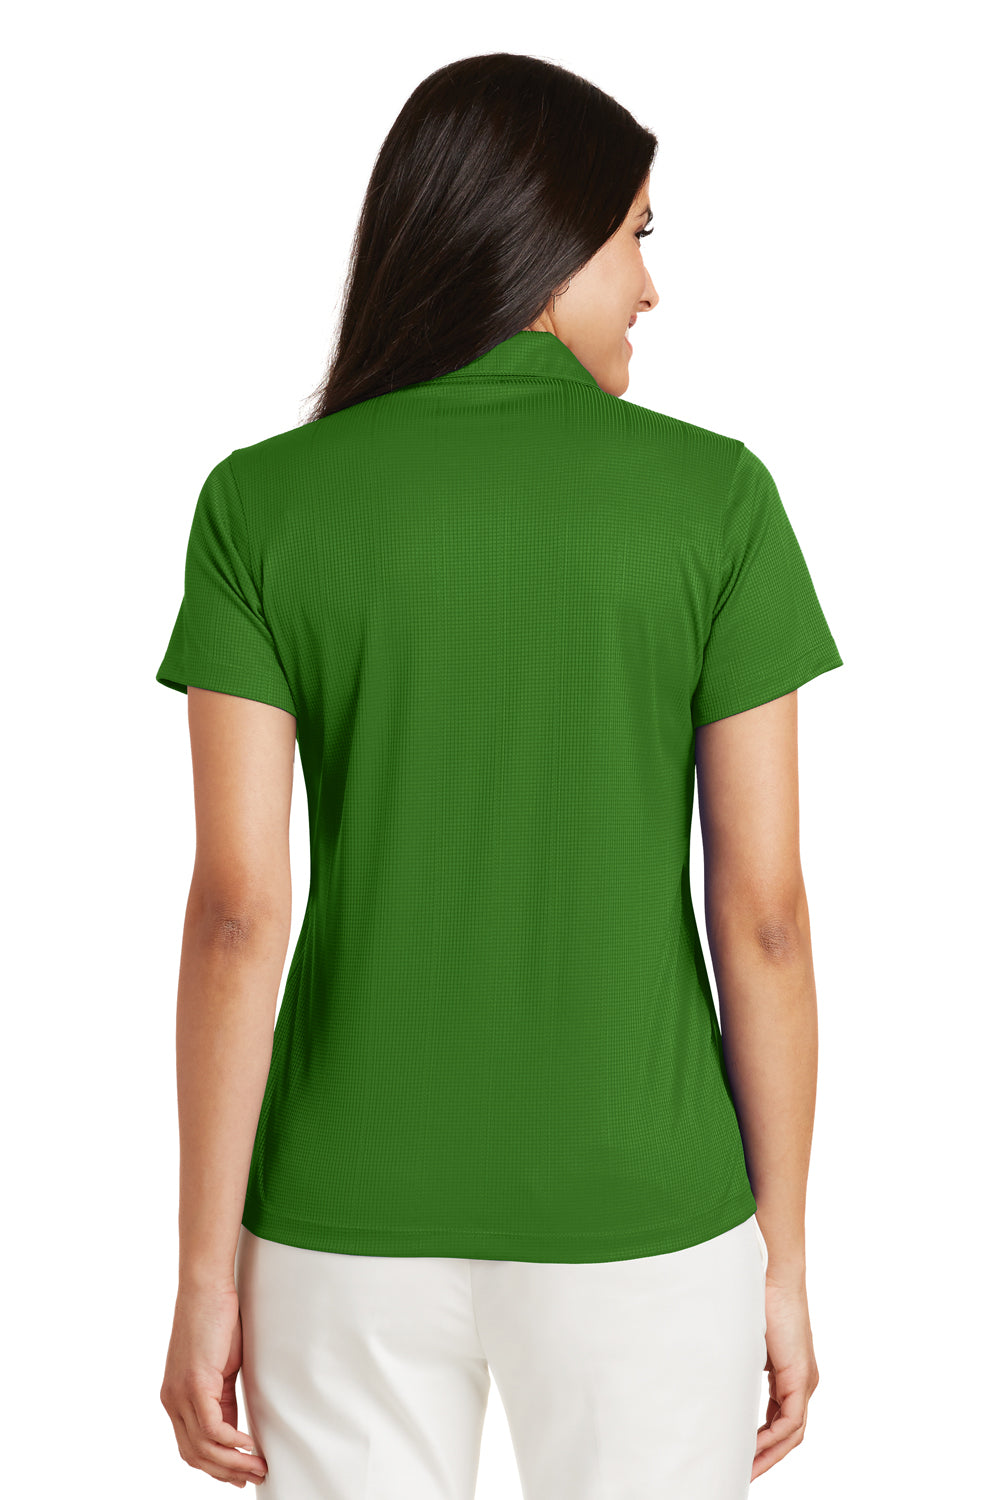 Port Authority L528 Womens Performance Moisture Wicking Short Sleeve Polo Shirt Vine Green Back